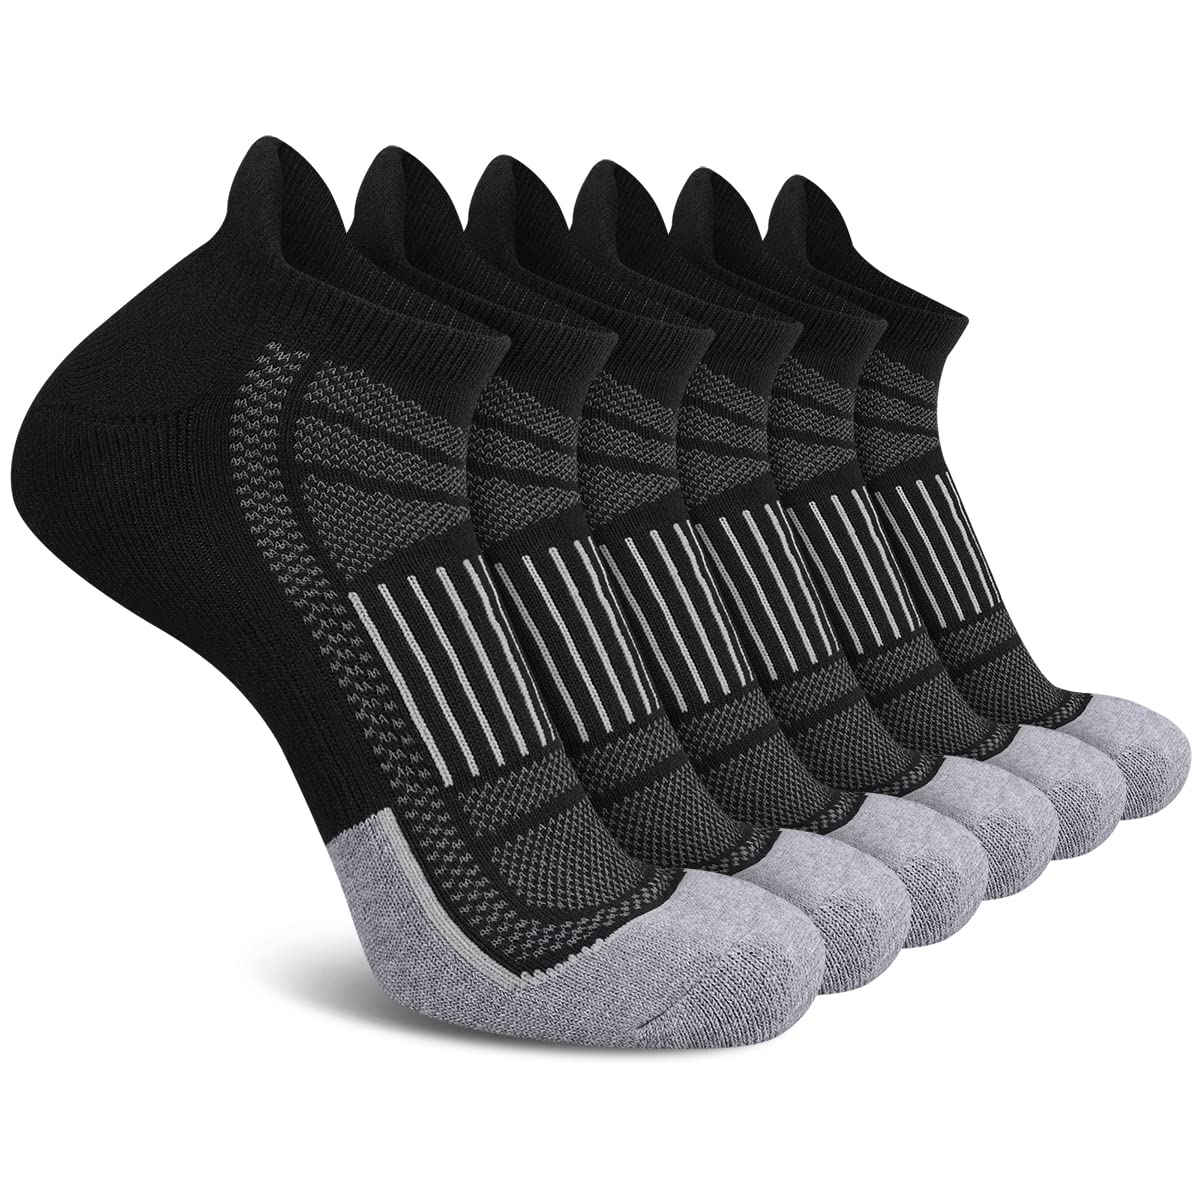 eallco Mens Ankle Socks Low Cut Athletic Cushioned Running Tab Socks 6 Pack